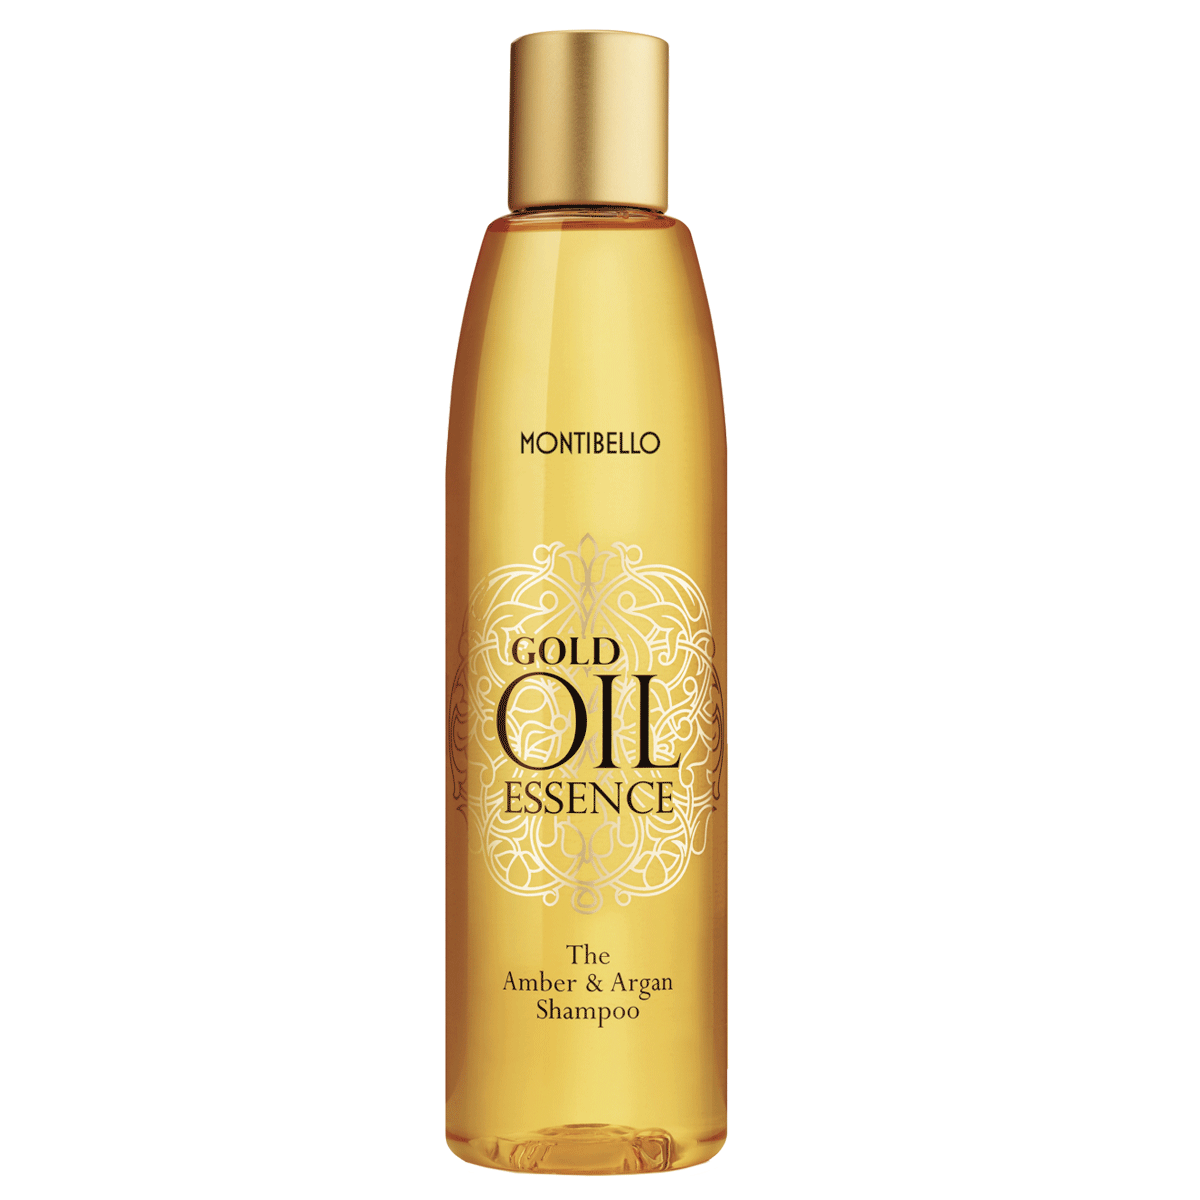 essence ultime amber & oil anti-breakage szampon opinie